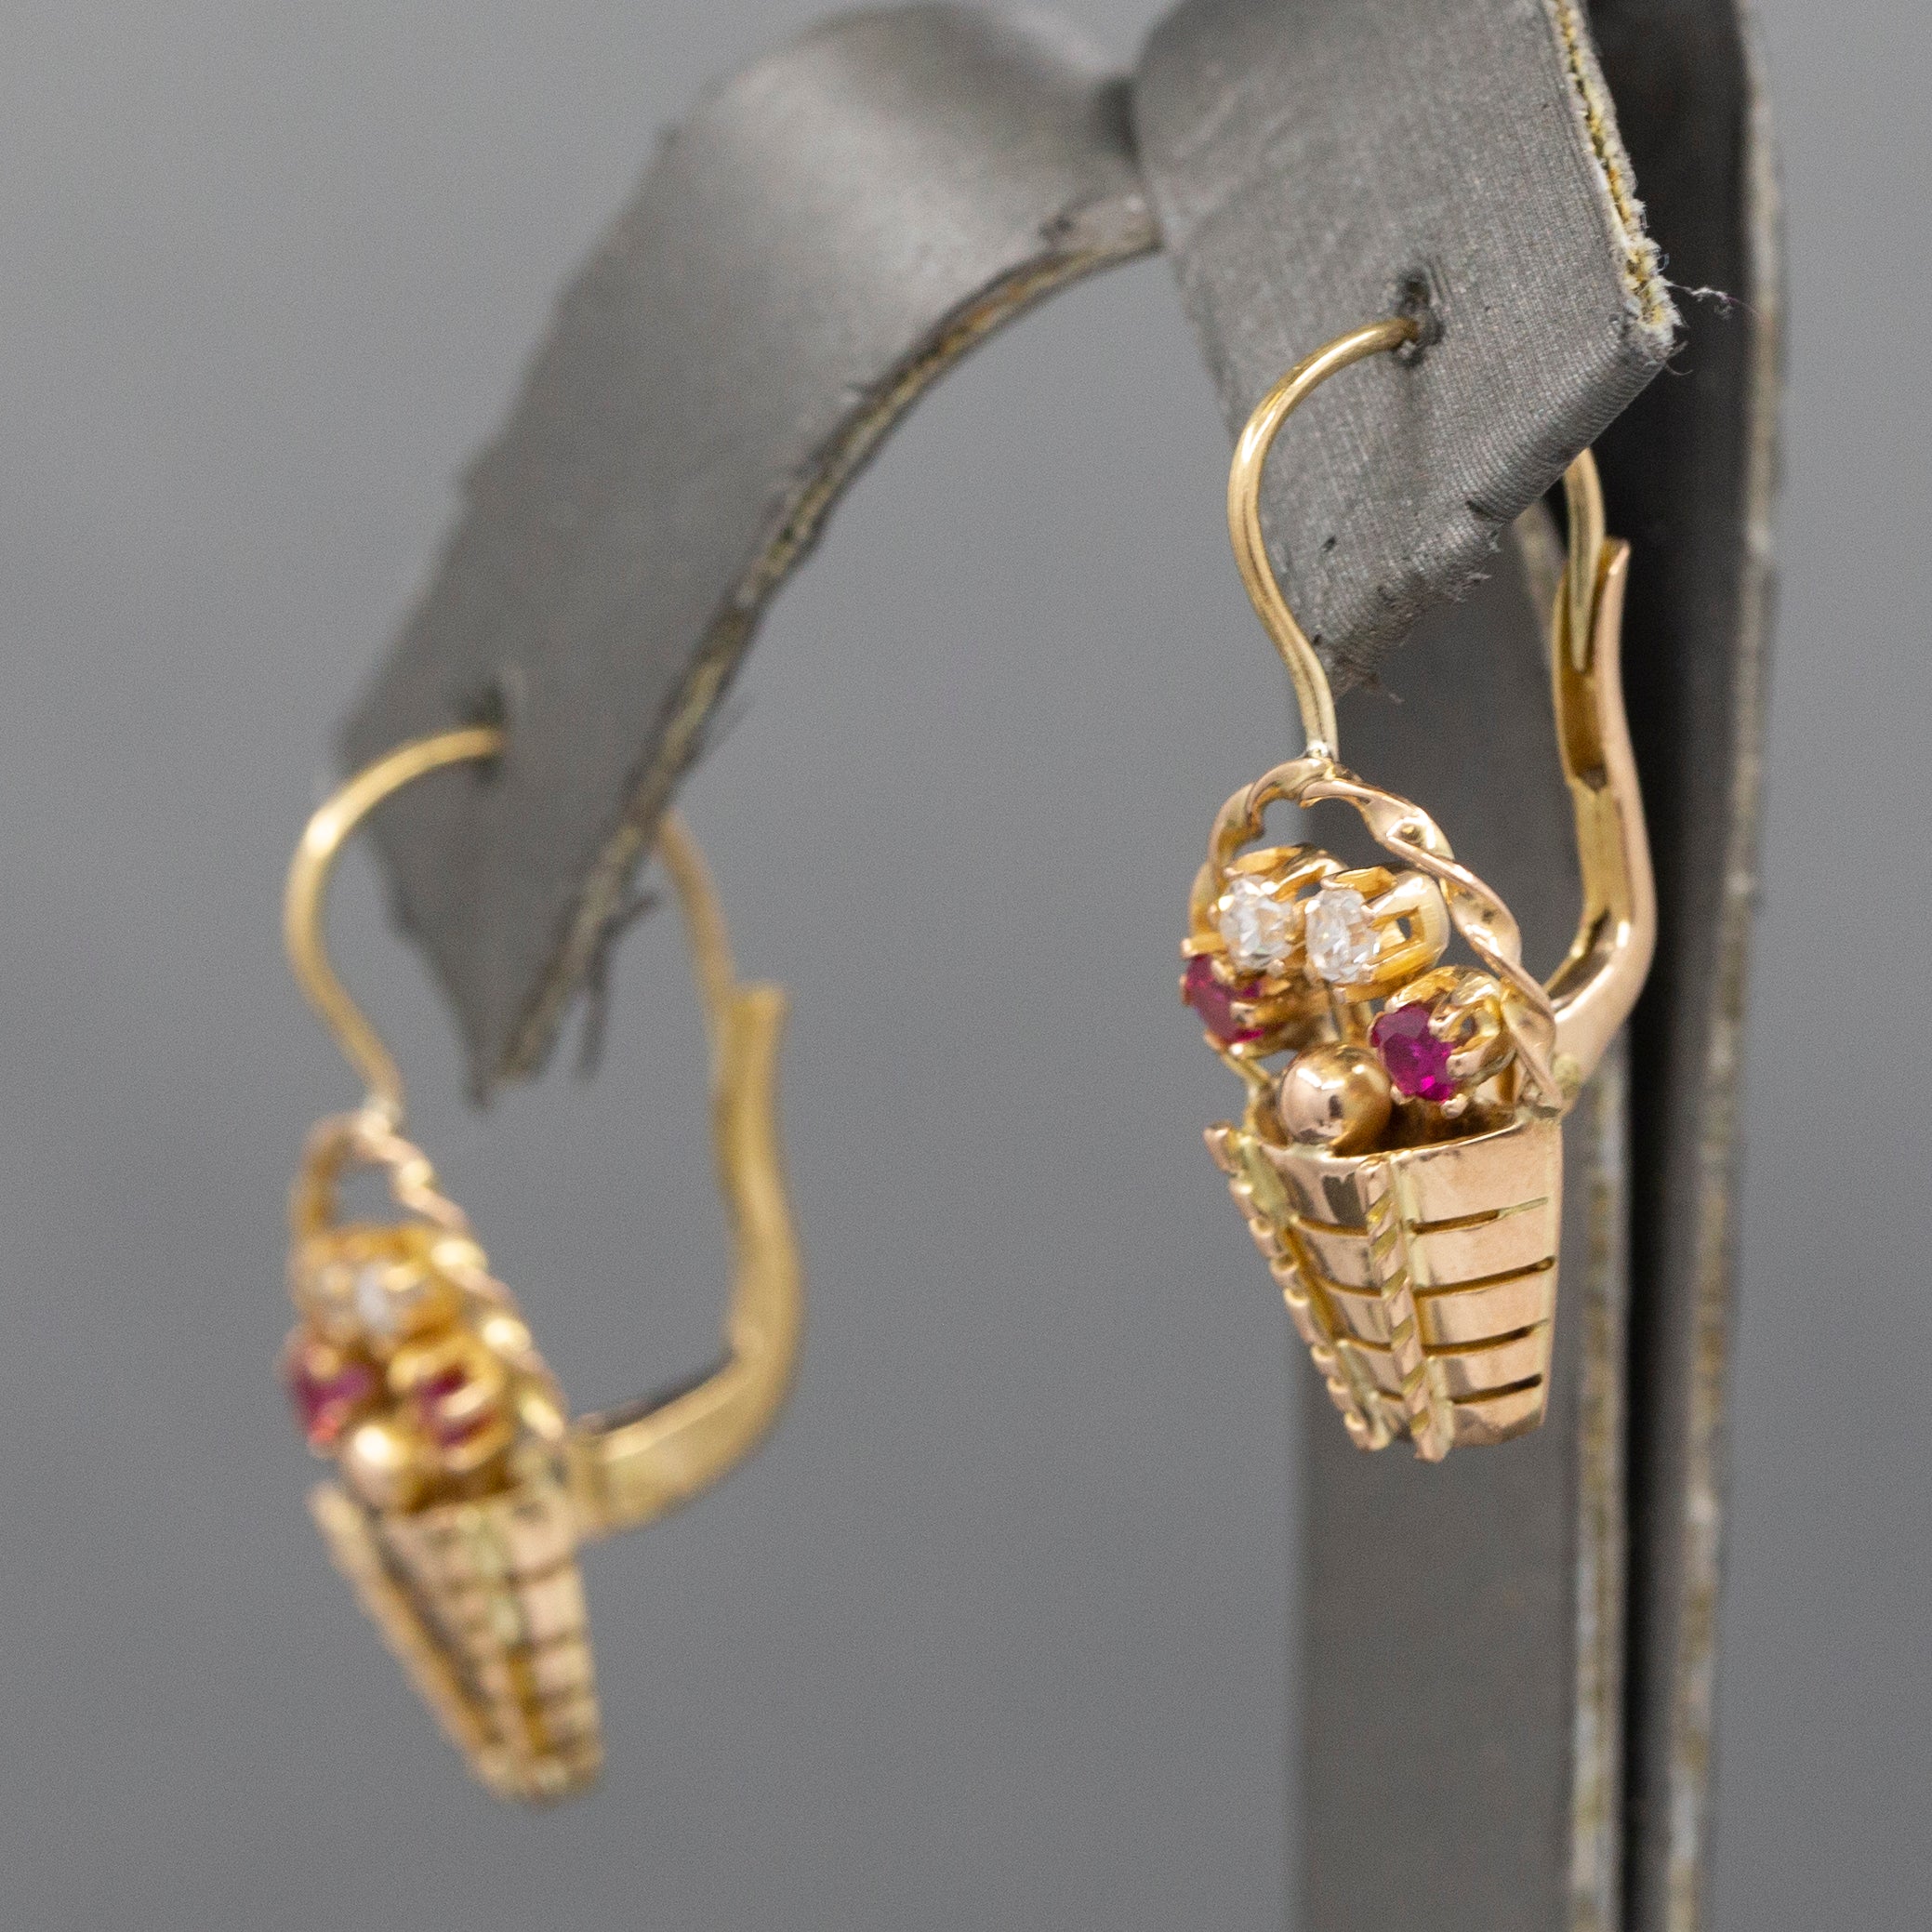 Late Art Deco Ruby and Diamond Flower Basket Earrings in 14k Yellow Gold